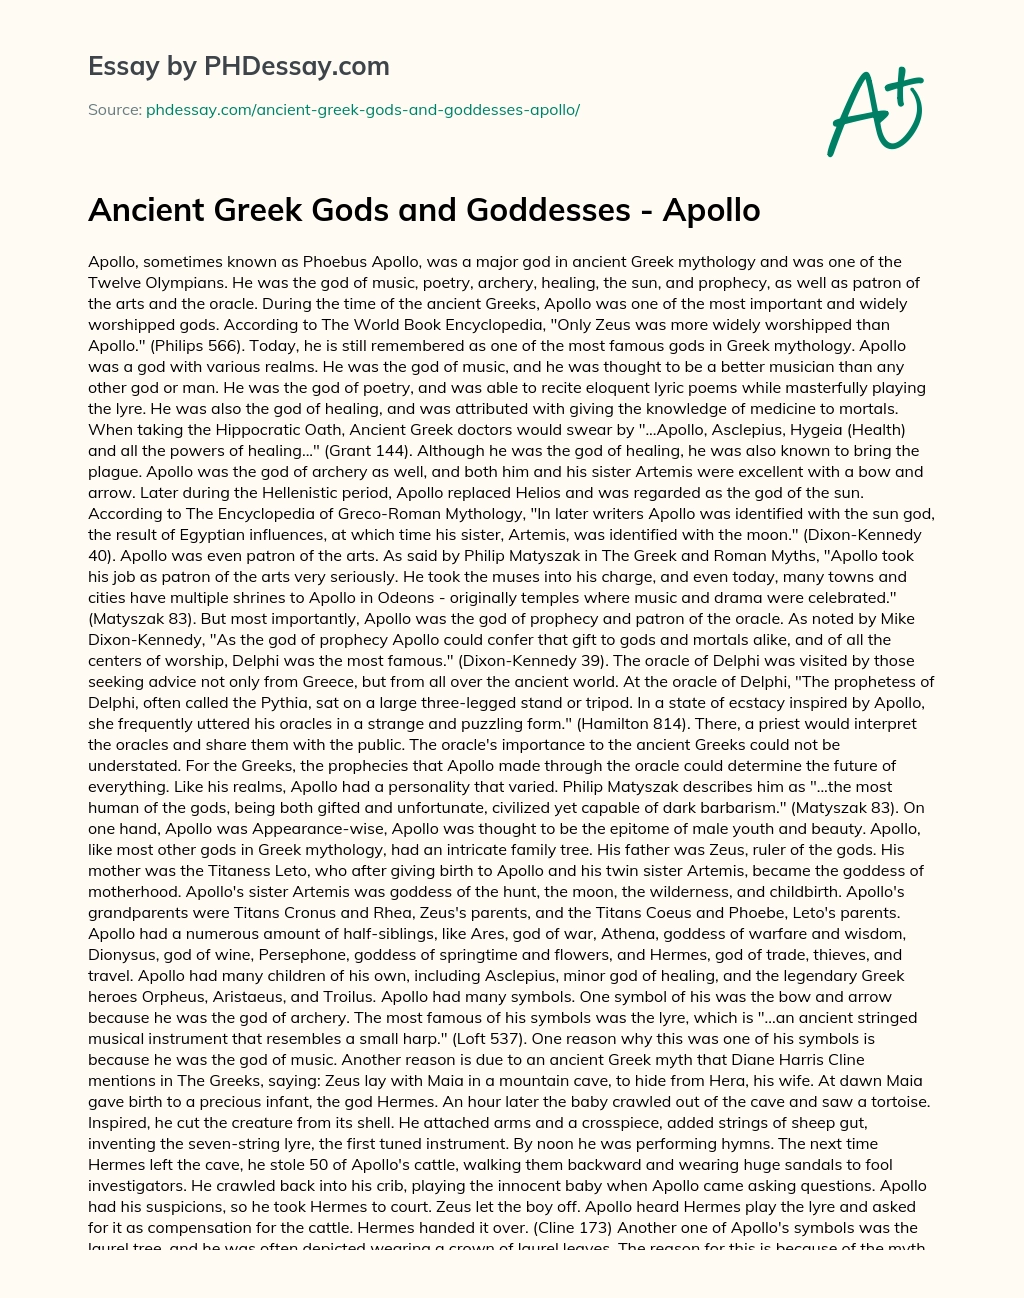 Ancient Greek Gods and Goddesses – Apollo essay